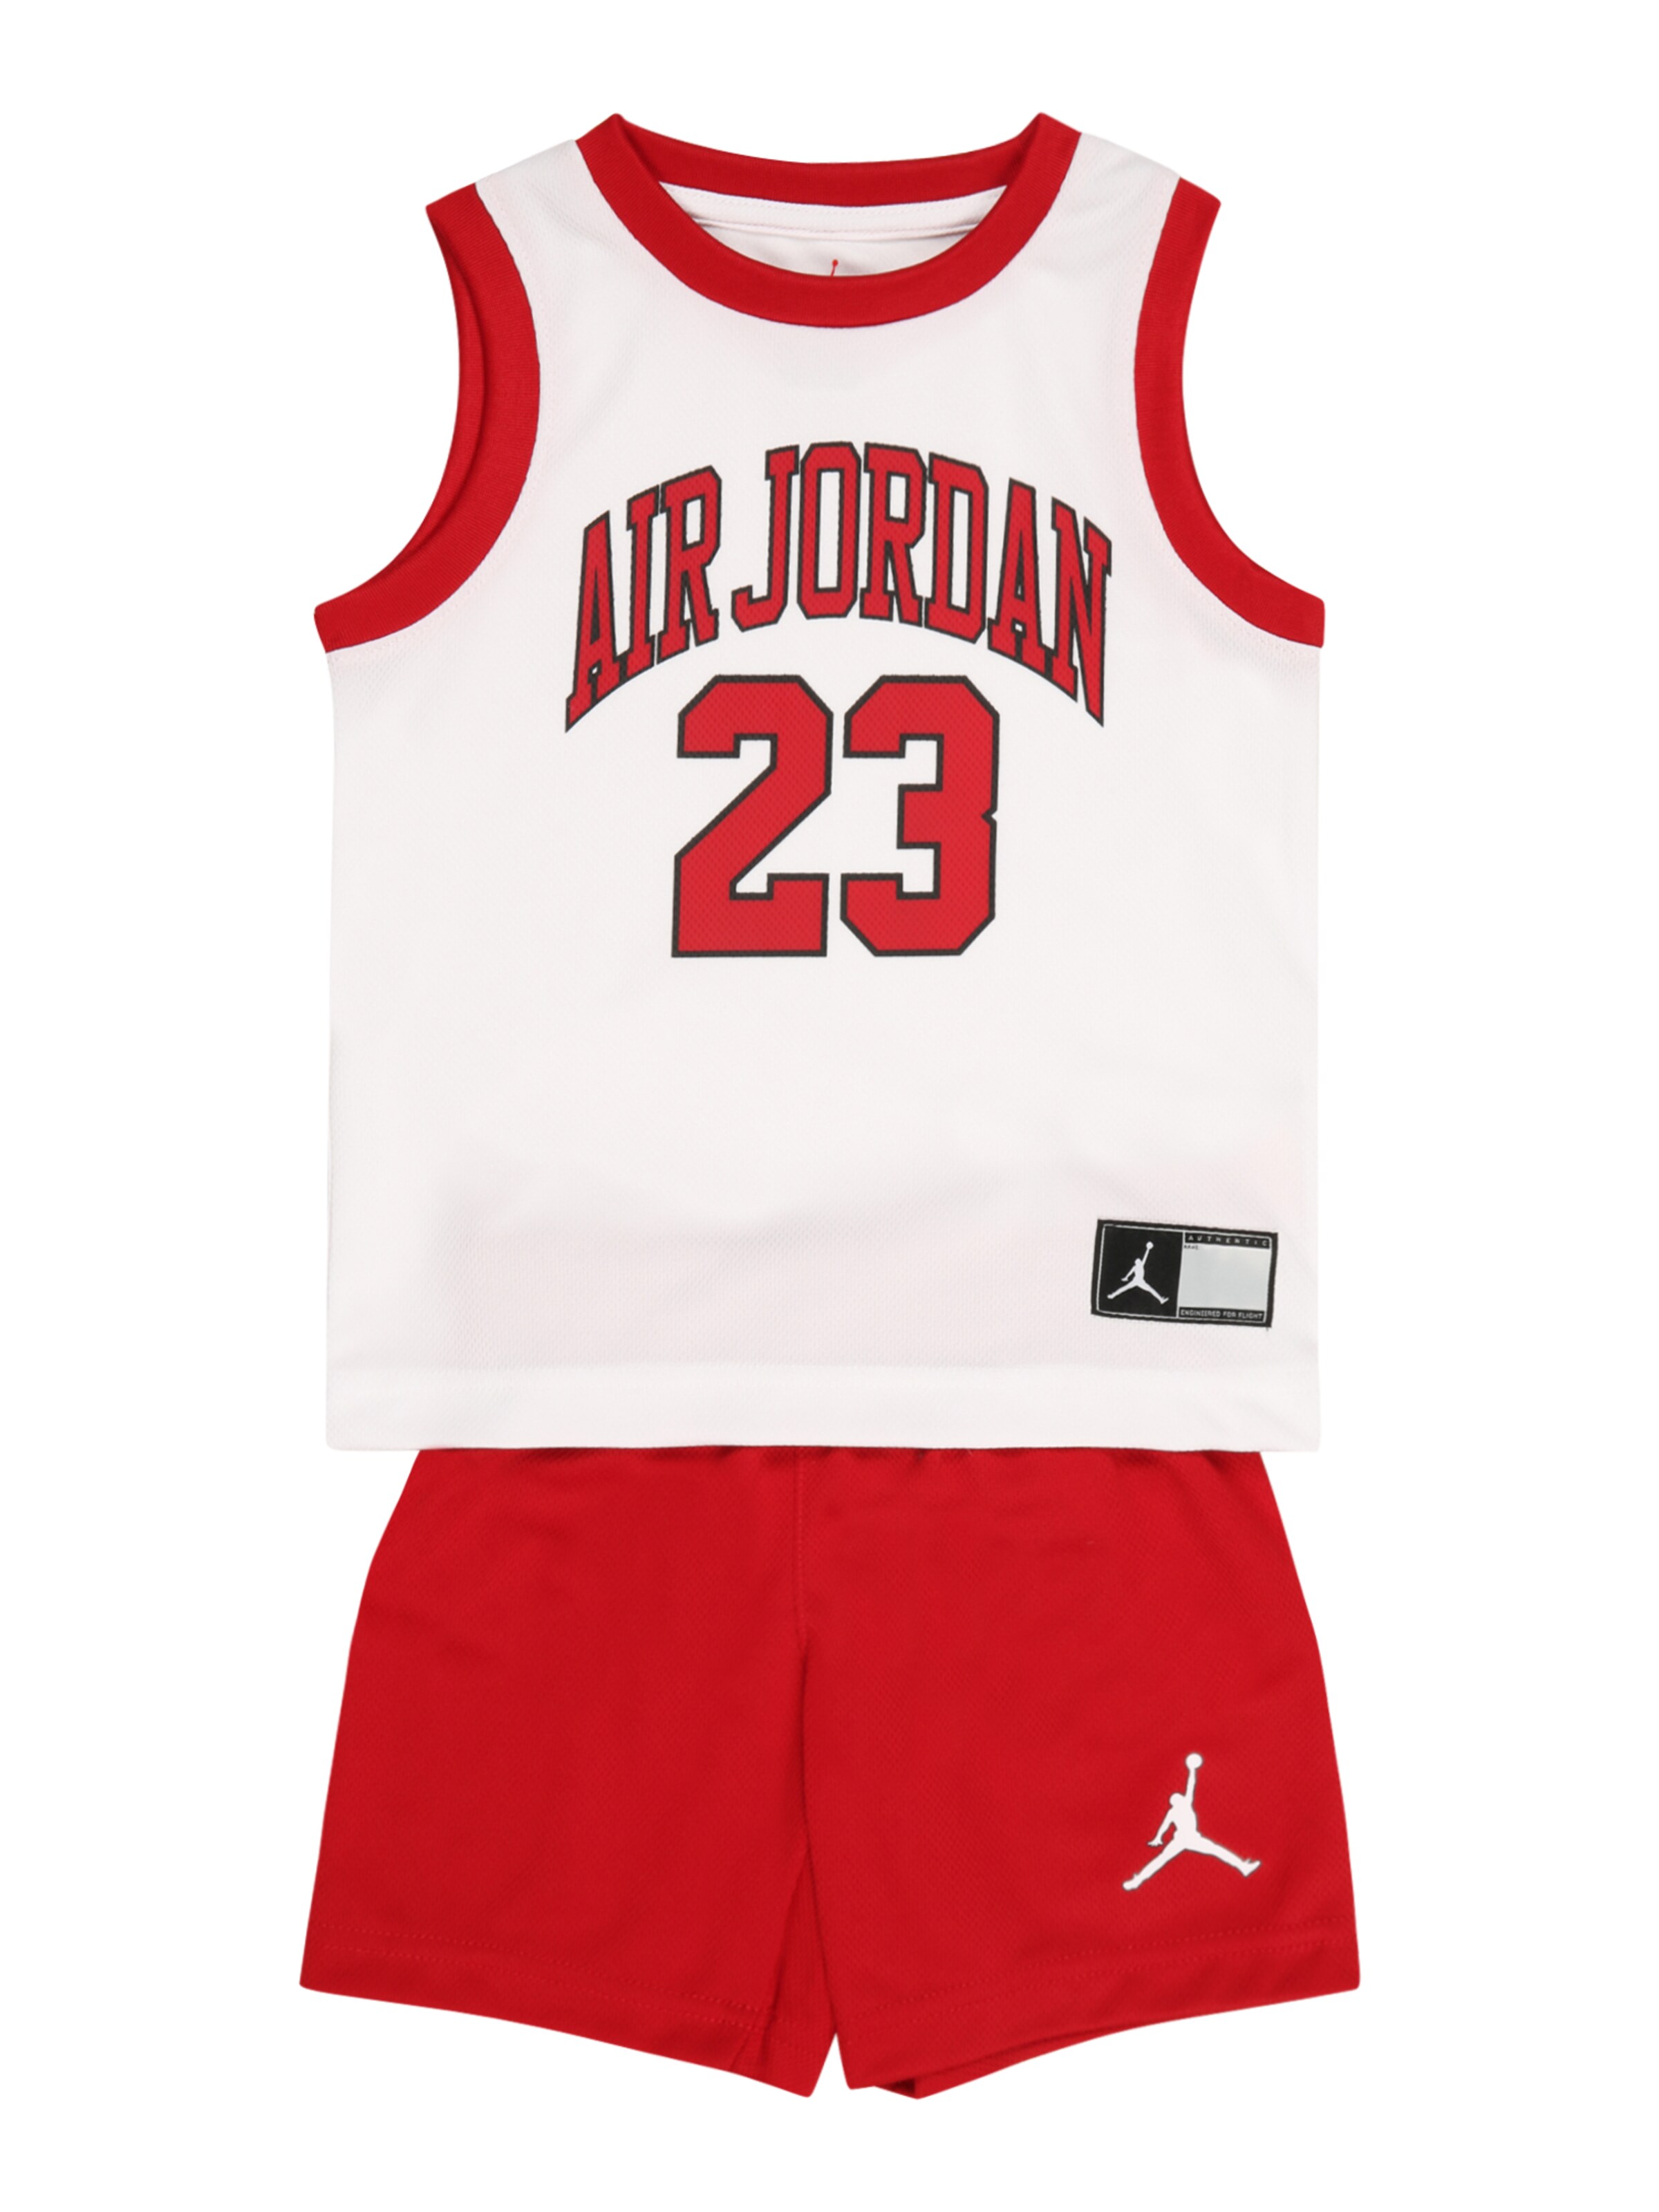 Jordan Trainingsanzug in Rot, Weiß 